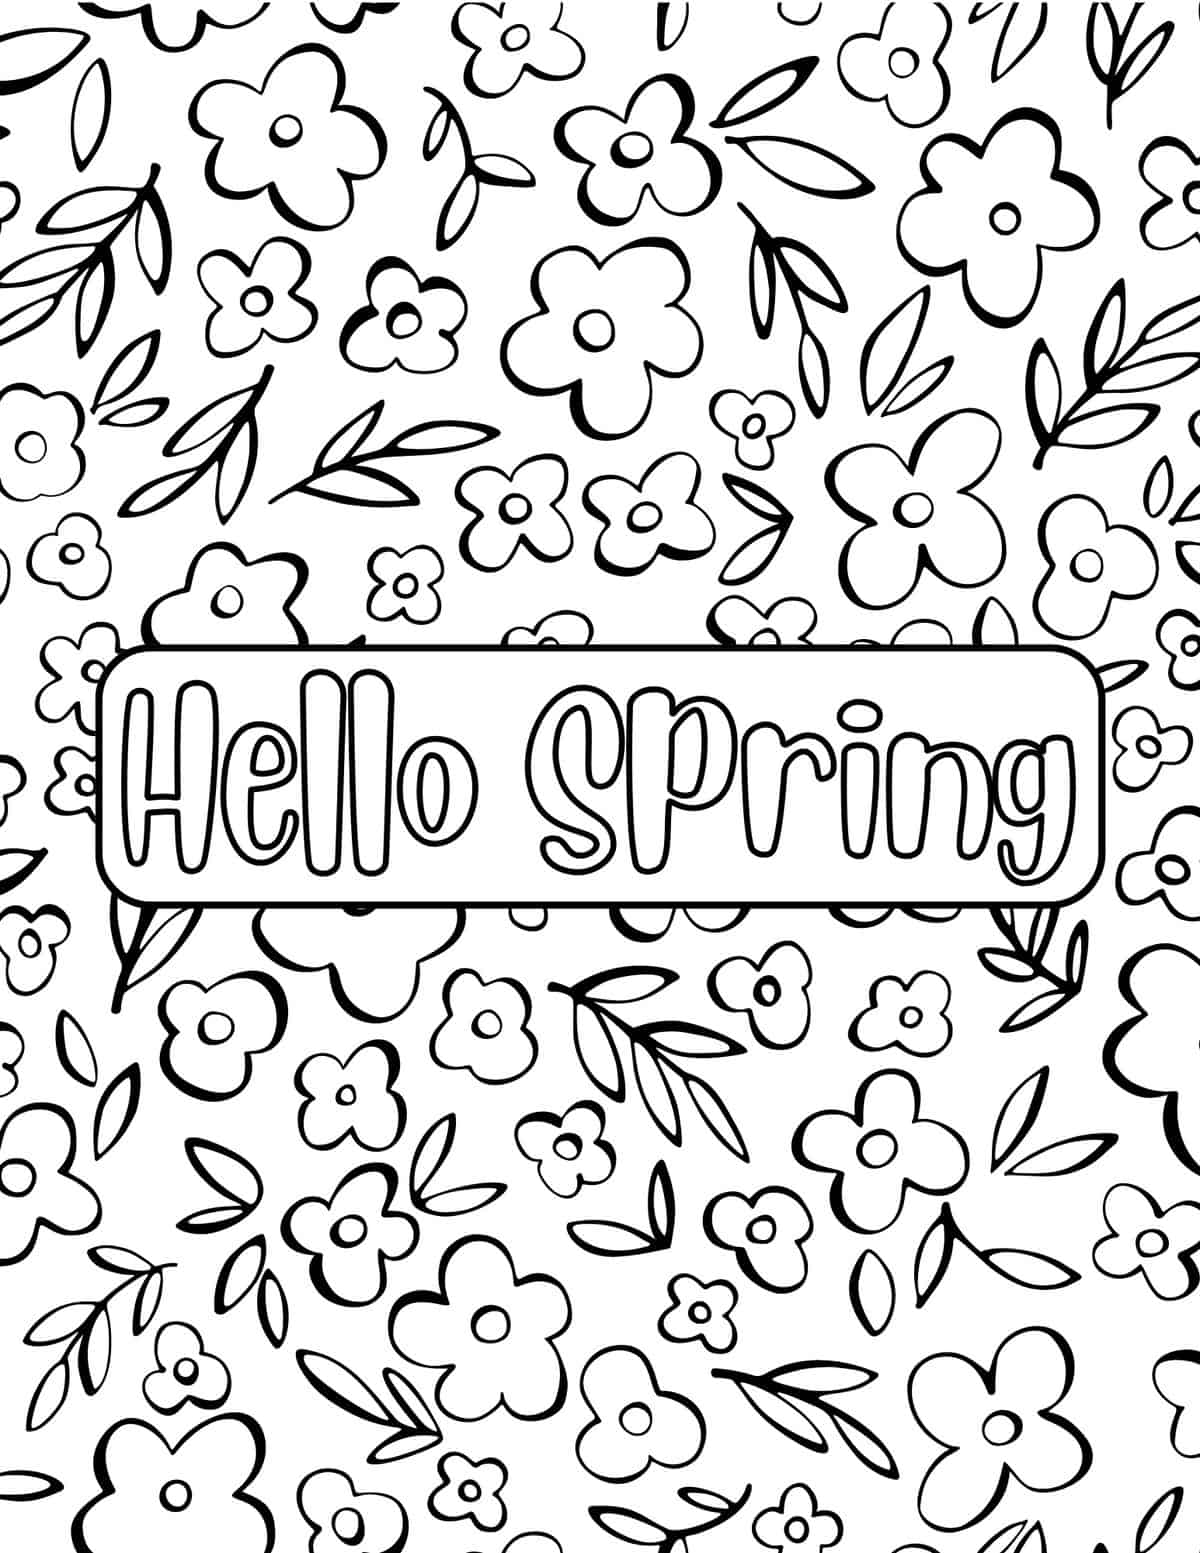 hello spring flower doodles